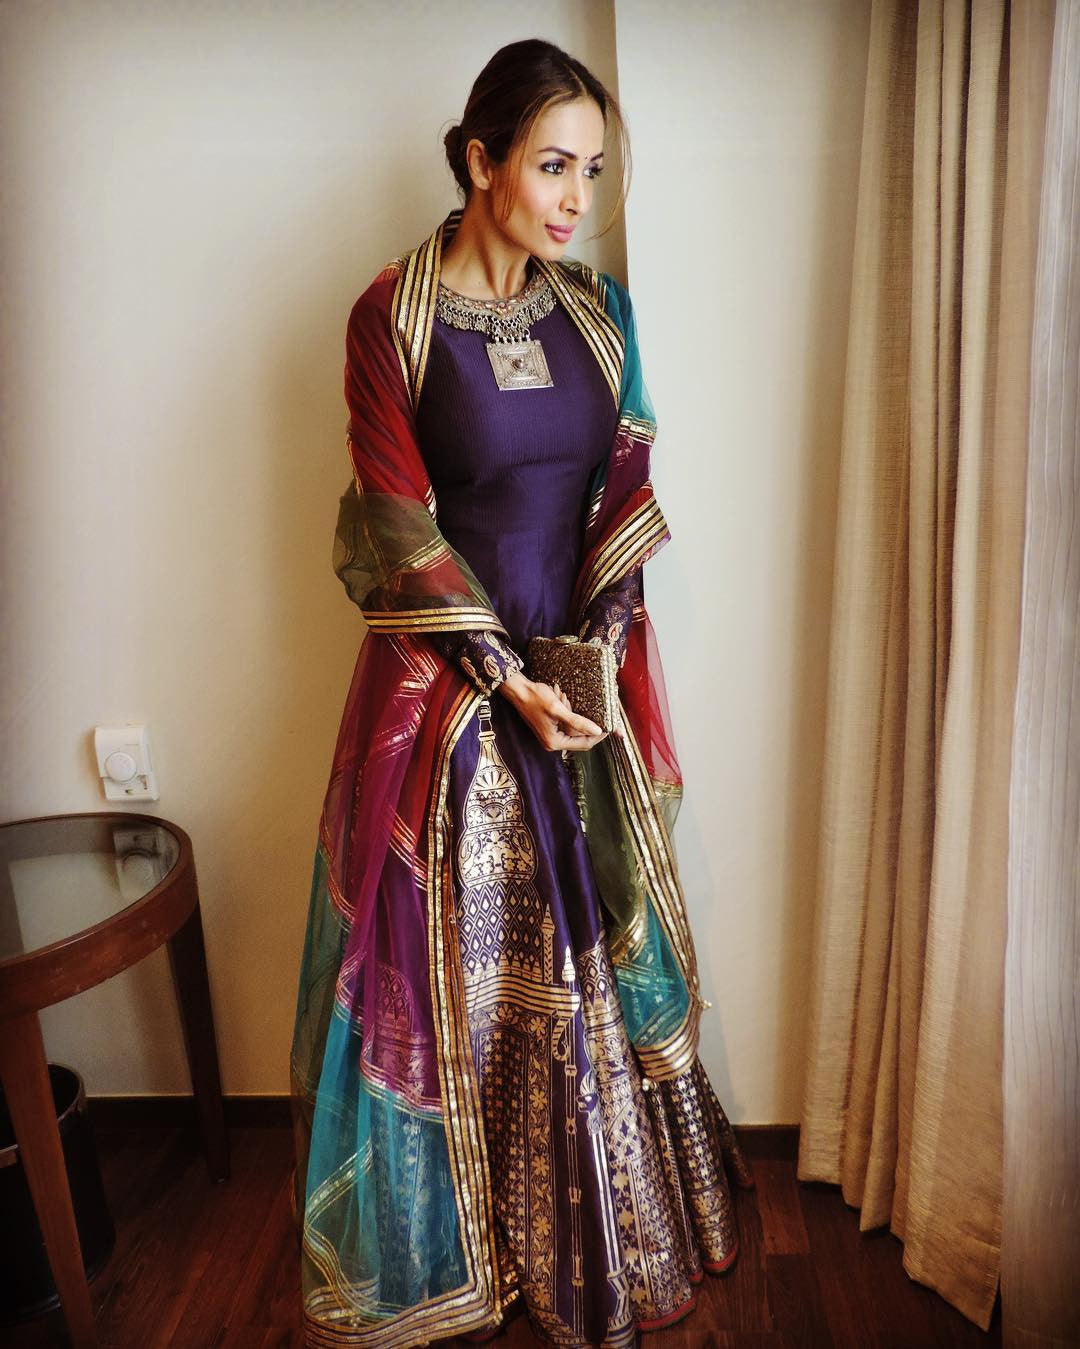 Malaika Arora looked Gorgeous in Rimple and Harpreet Narula's Designer Anarakli Suit